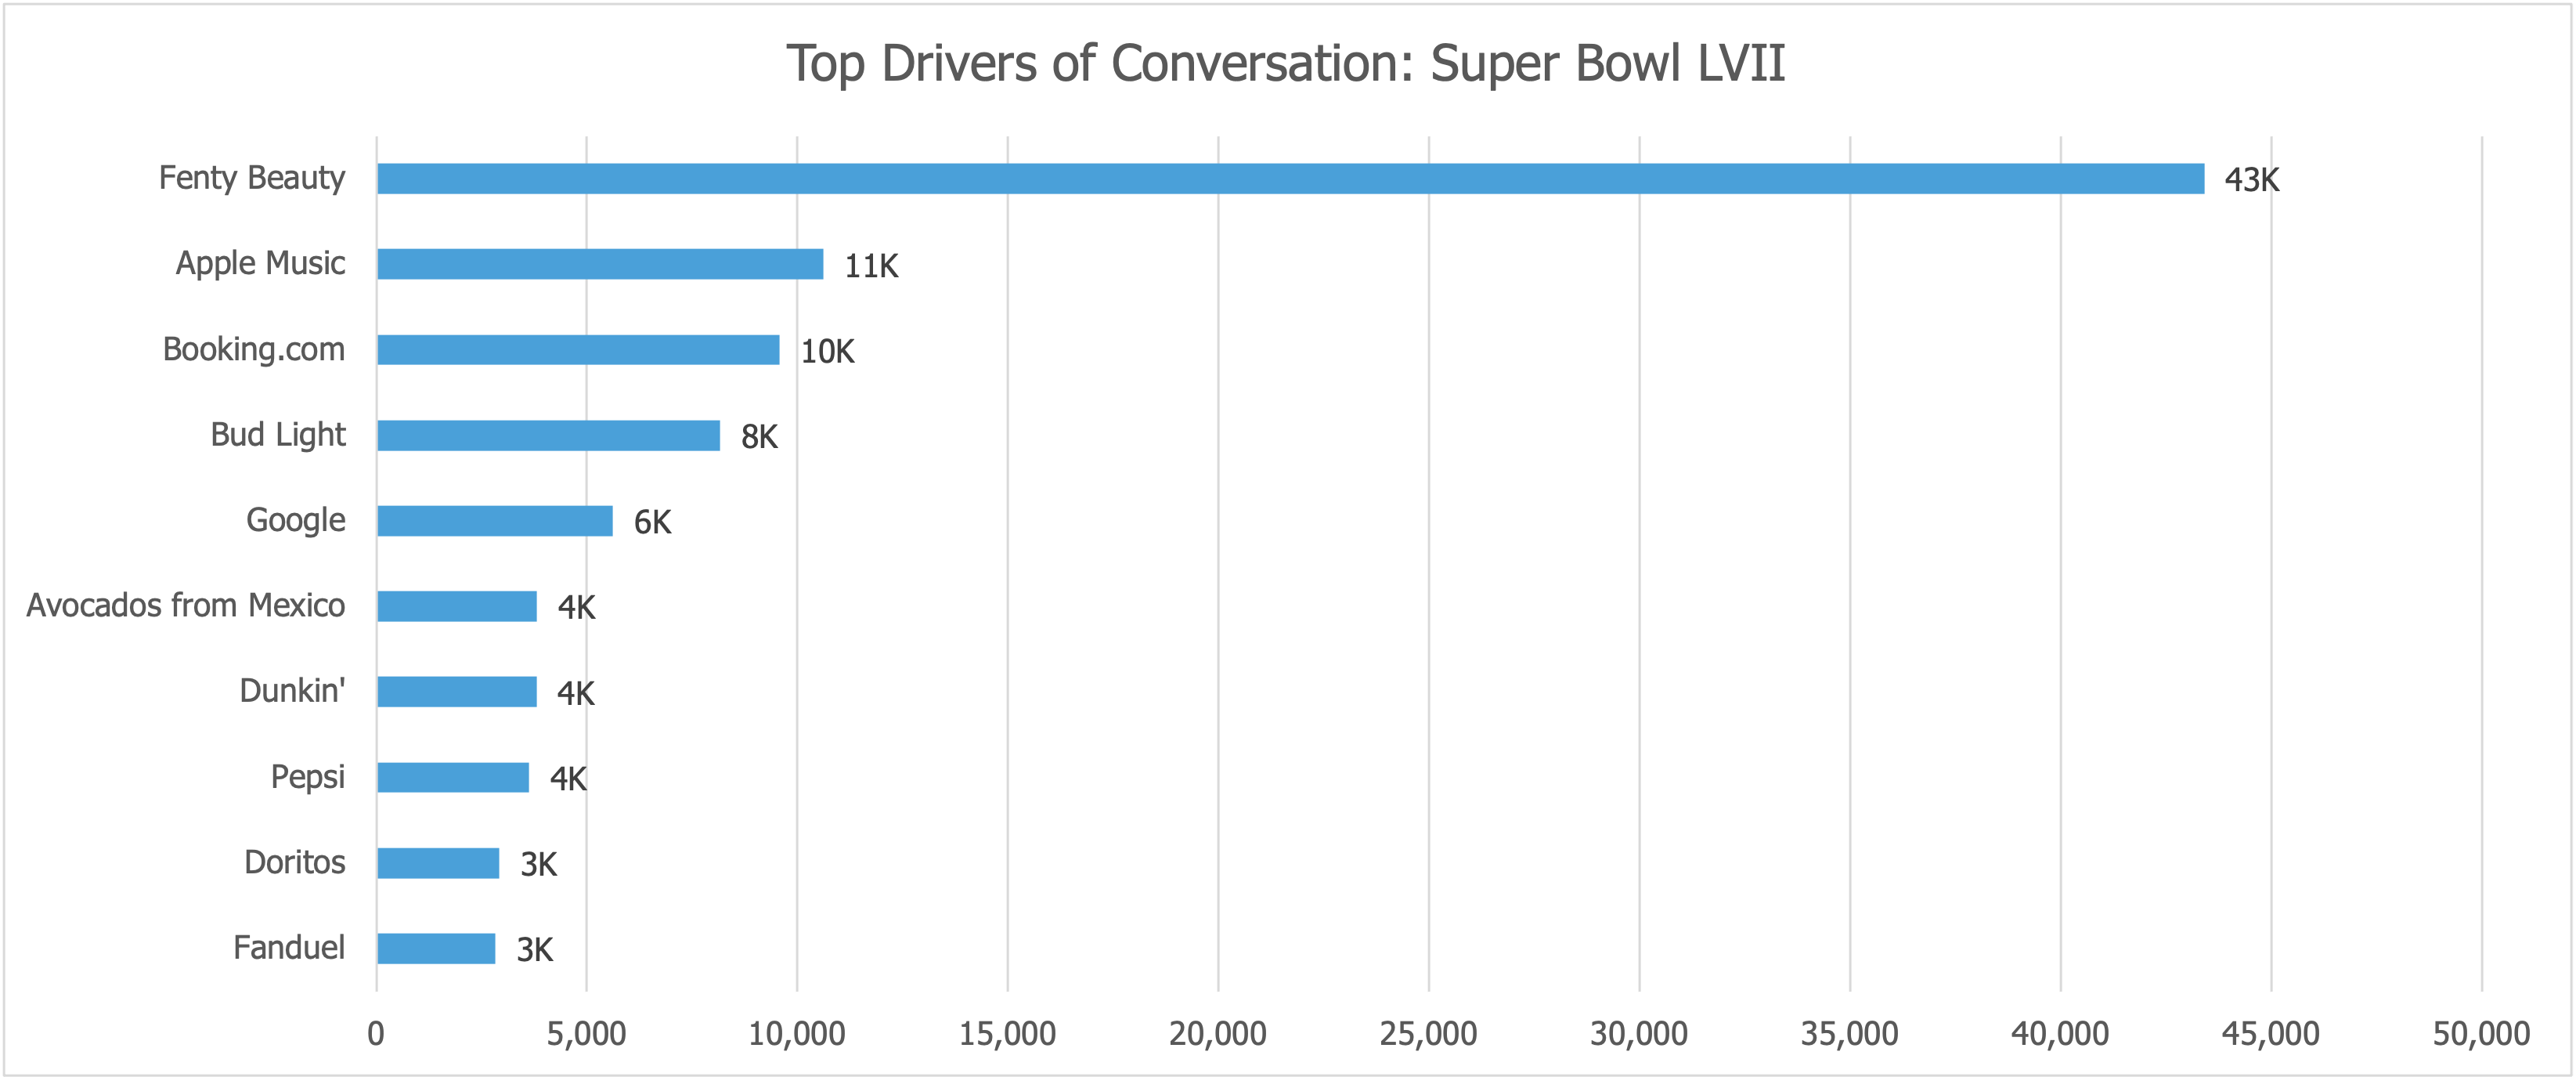 Top Drivers of Conversation: Super Bowl LVII